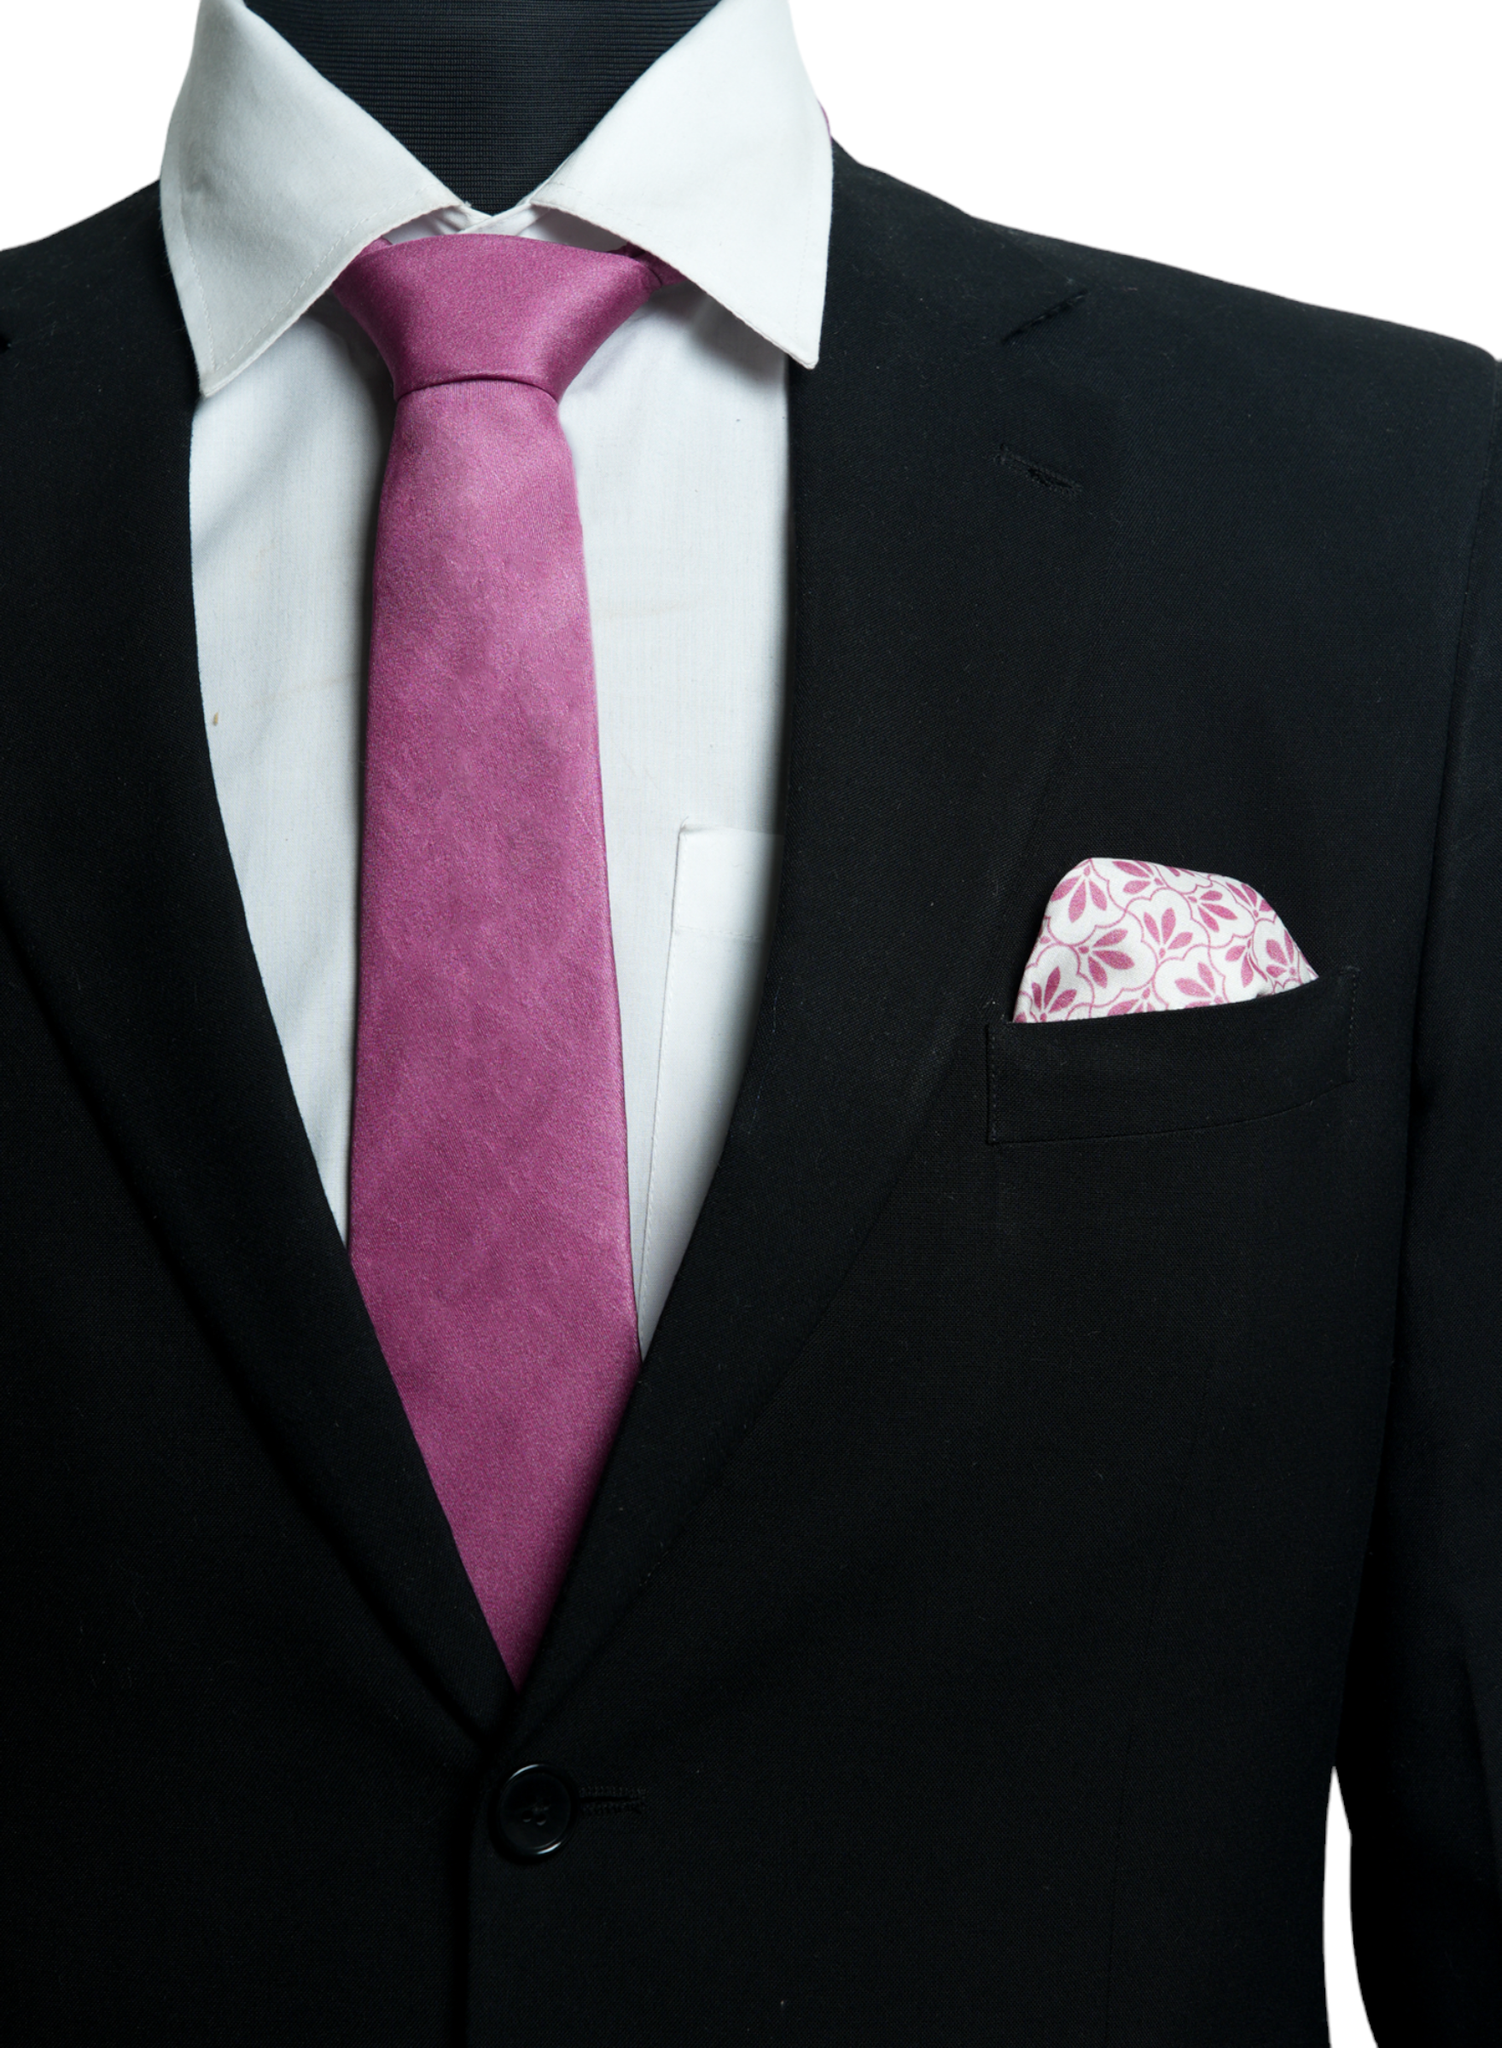 Chokore Jaali Good (Pink) - Pocket Square &  Flamingo Pink Silk Tie - Solids line